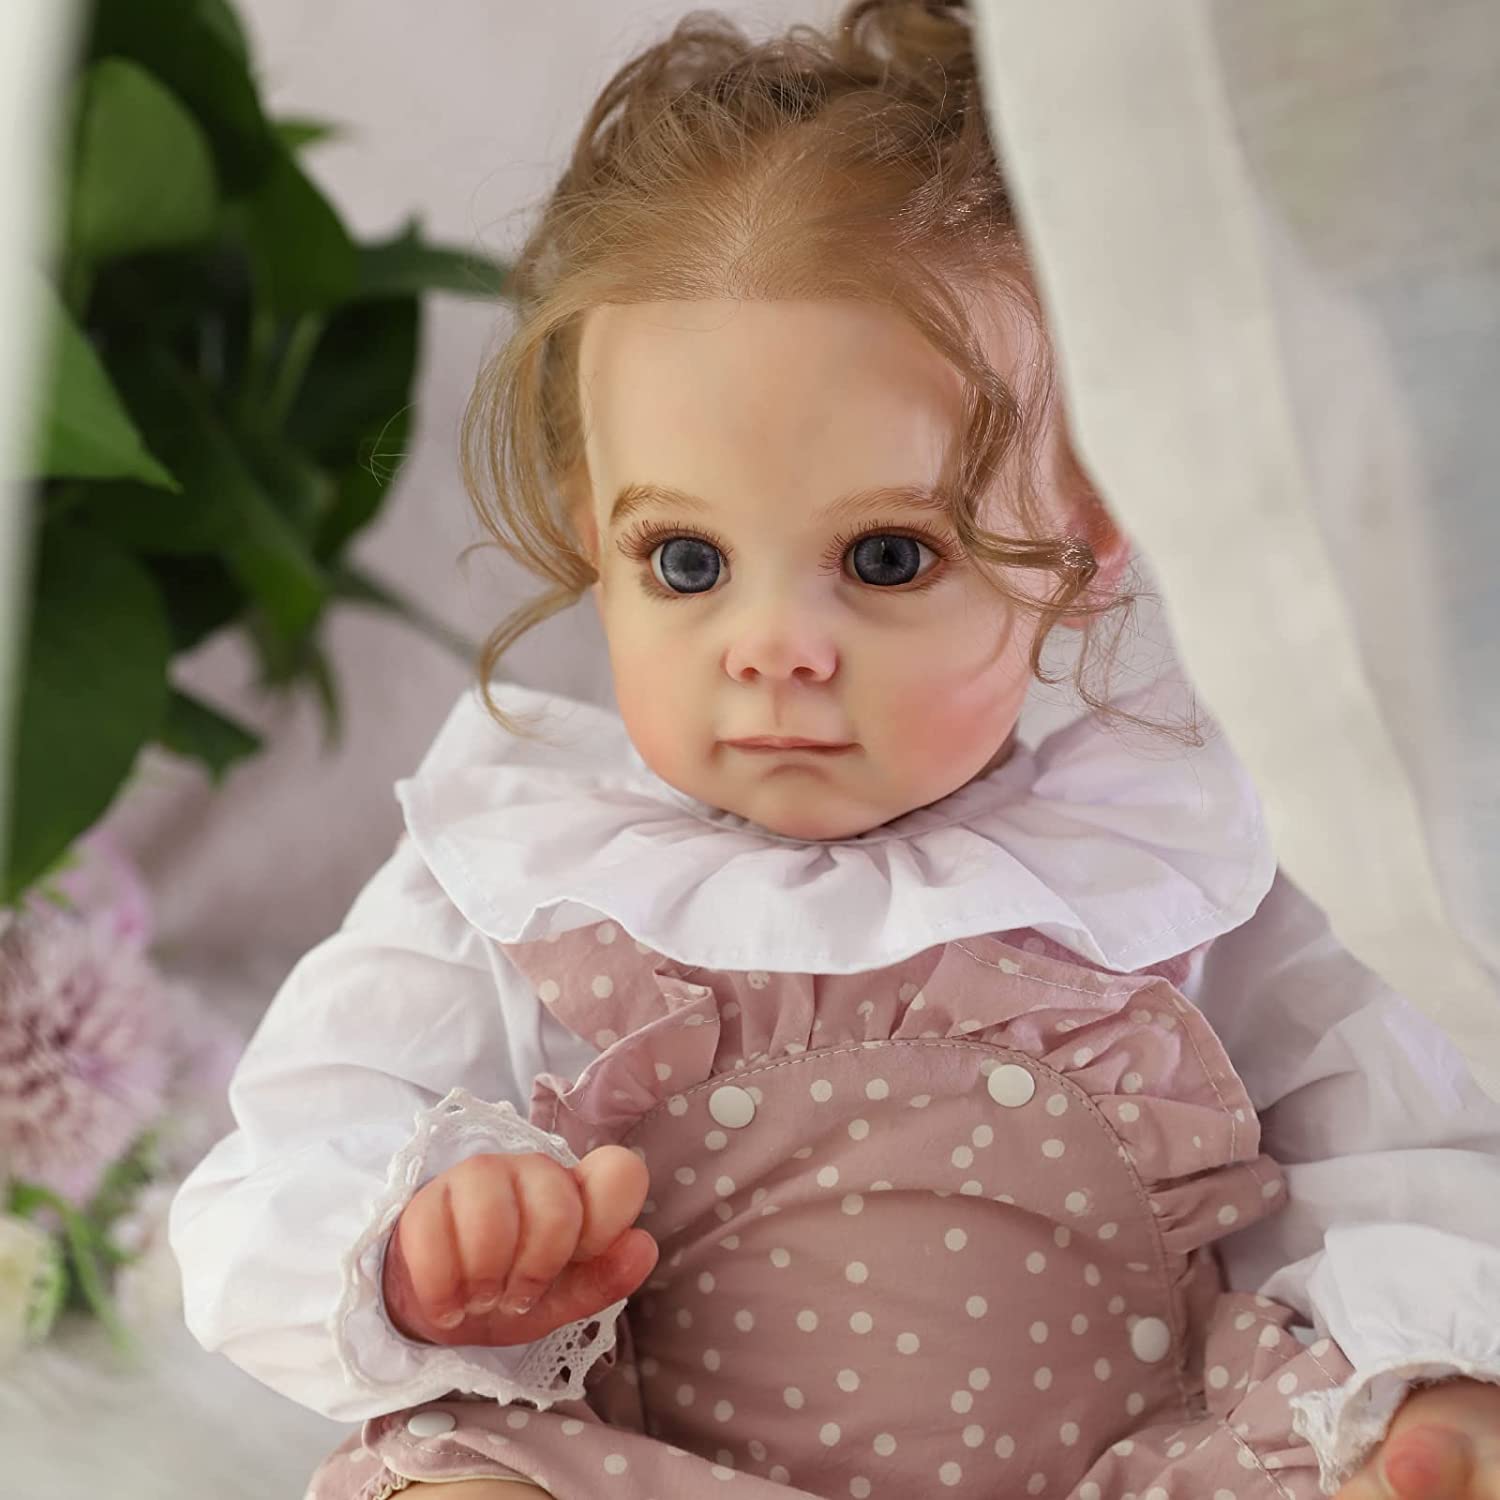 ZIYIUI Reborn Doll Baby Girl 24 Inch 60 cm Soft Silicone Vinyl Real Life Baby Dolls Newborn Girl Toy Doll That Look Real Handmade Child’s Vinyl Dolls Birthday Xmas Gift